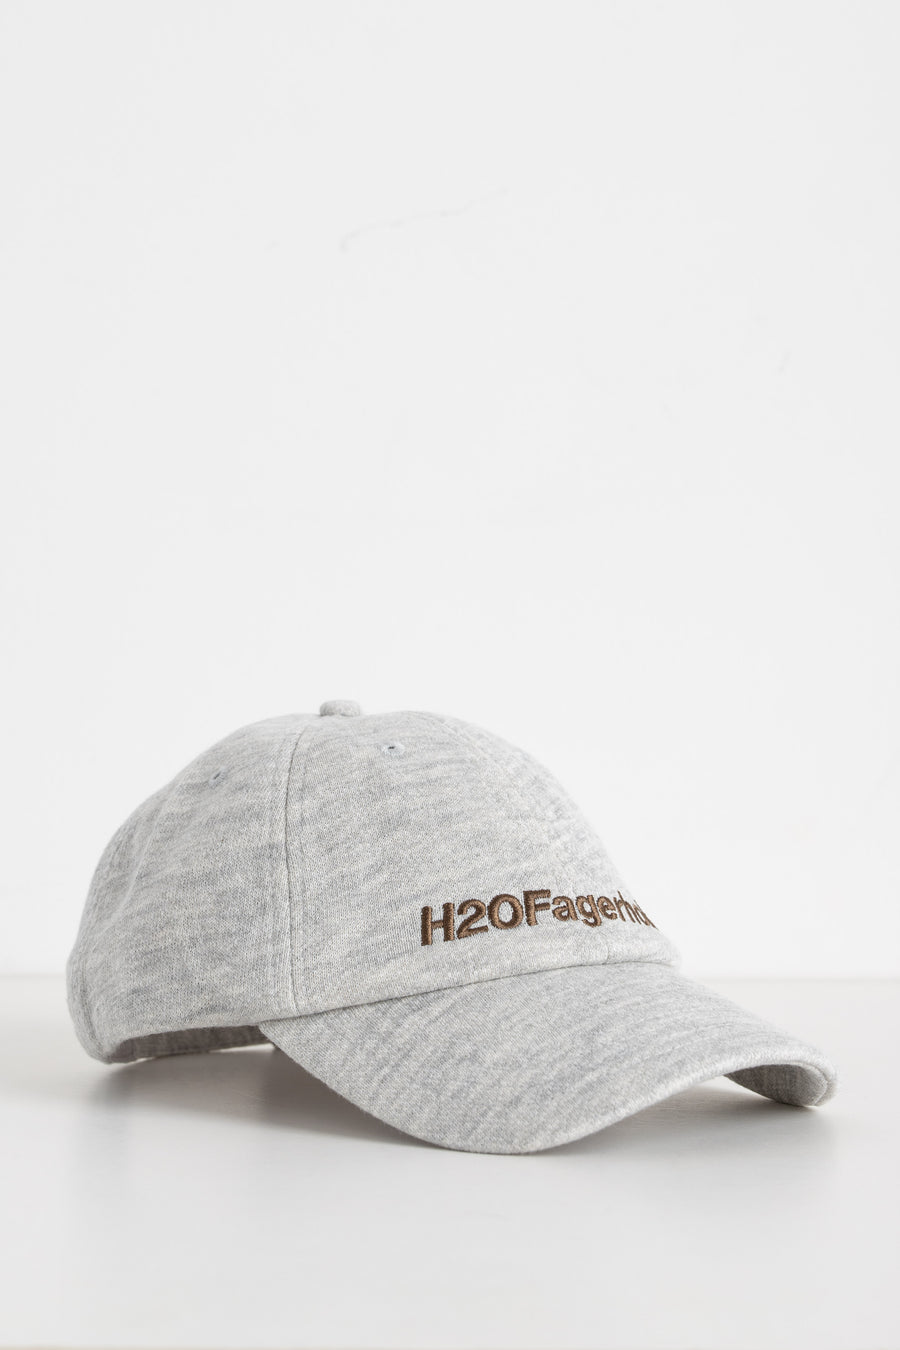 H2OFagerholt Cap grey